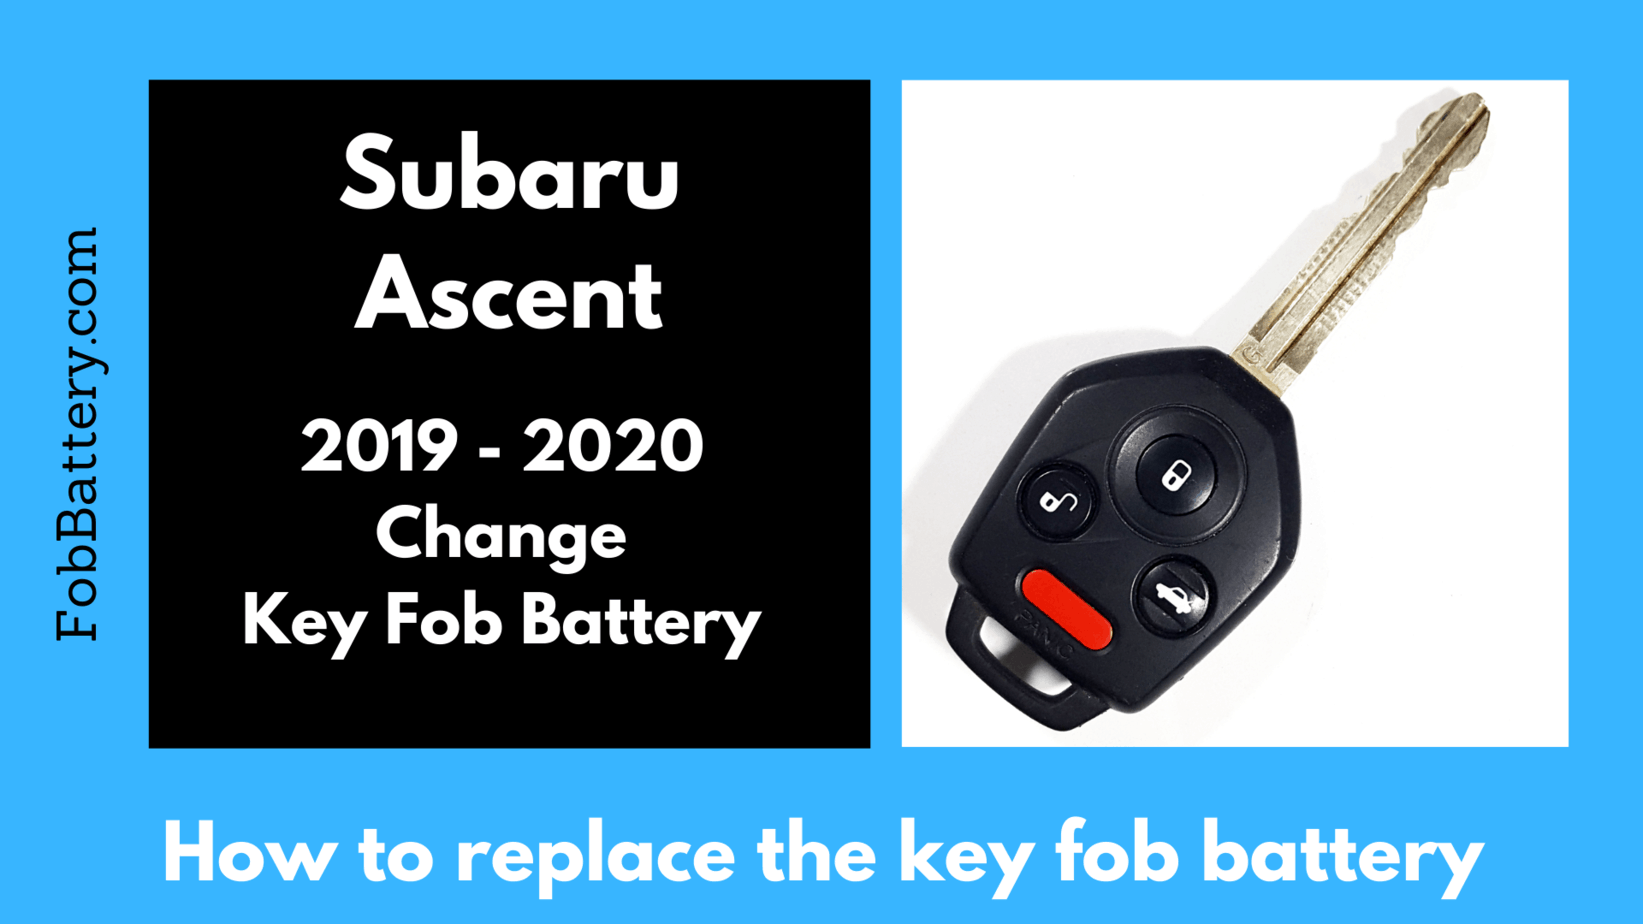 Subaru ascent key fob battery replacement DIY